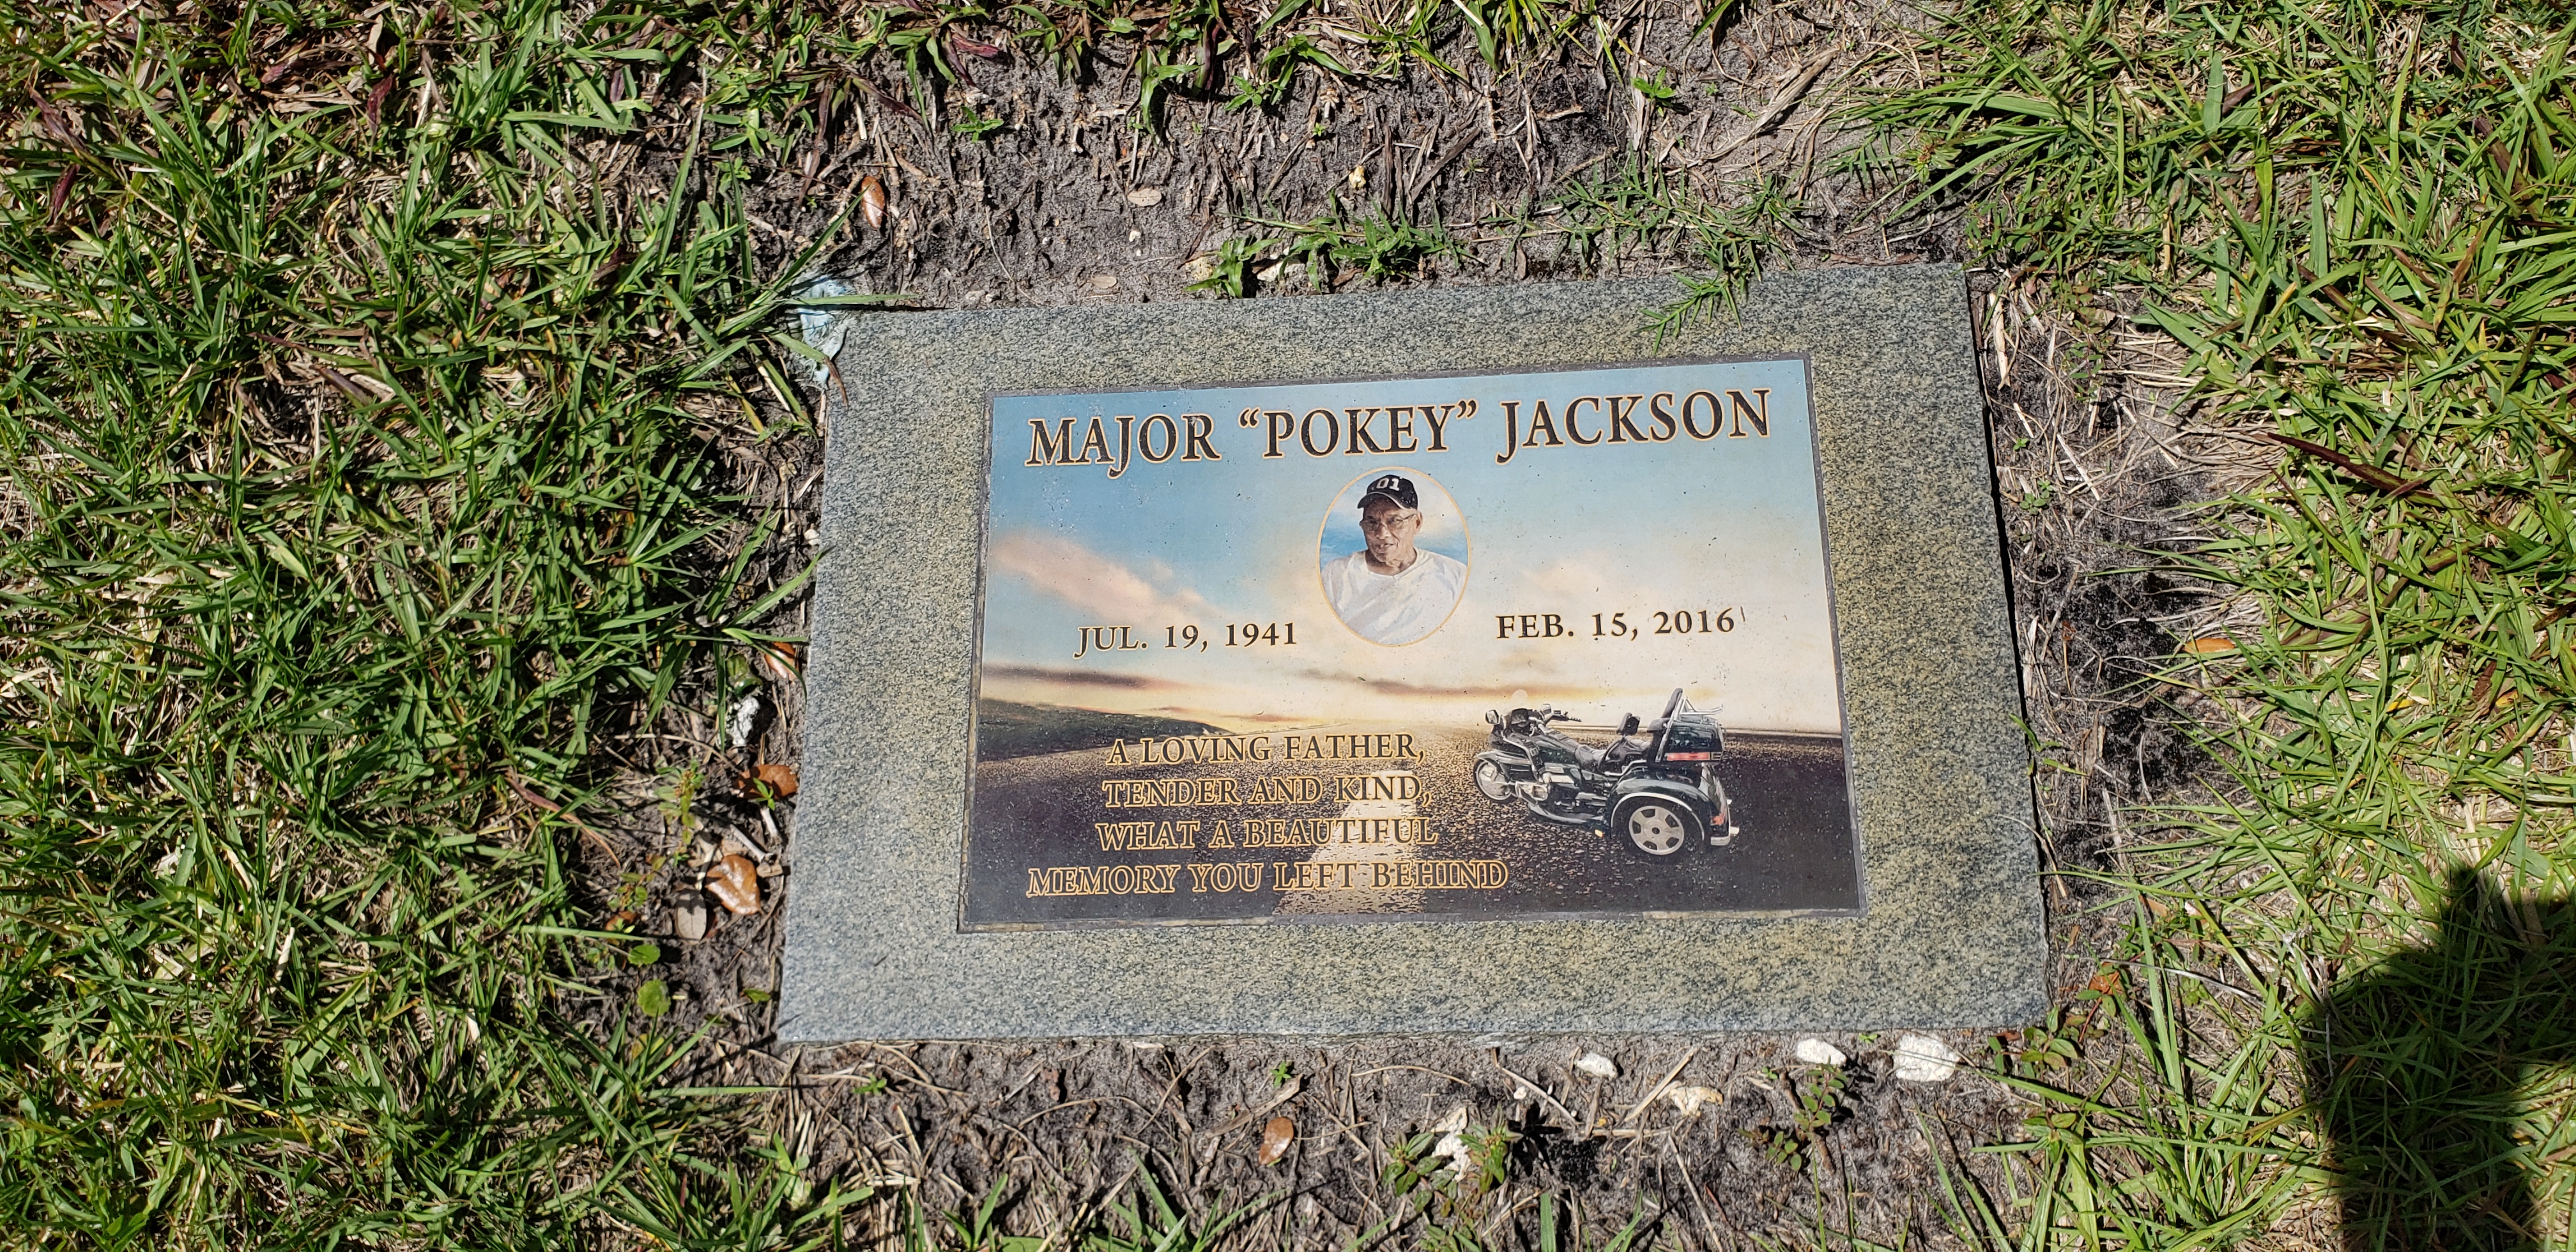 Major "Pokey" Jackson